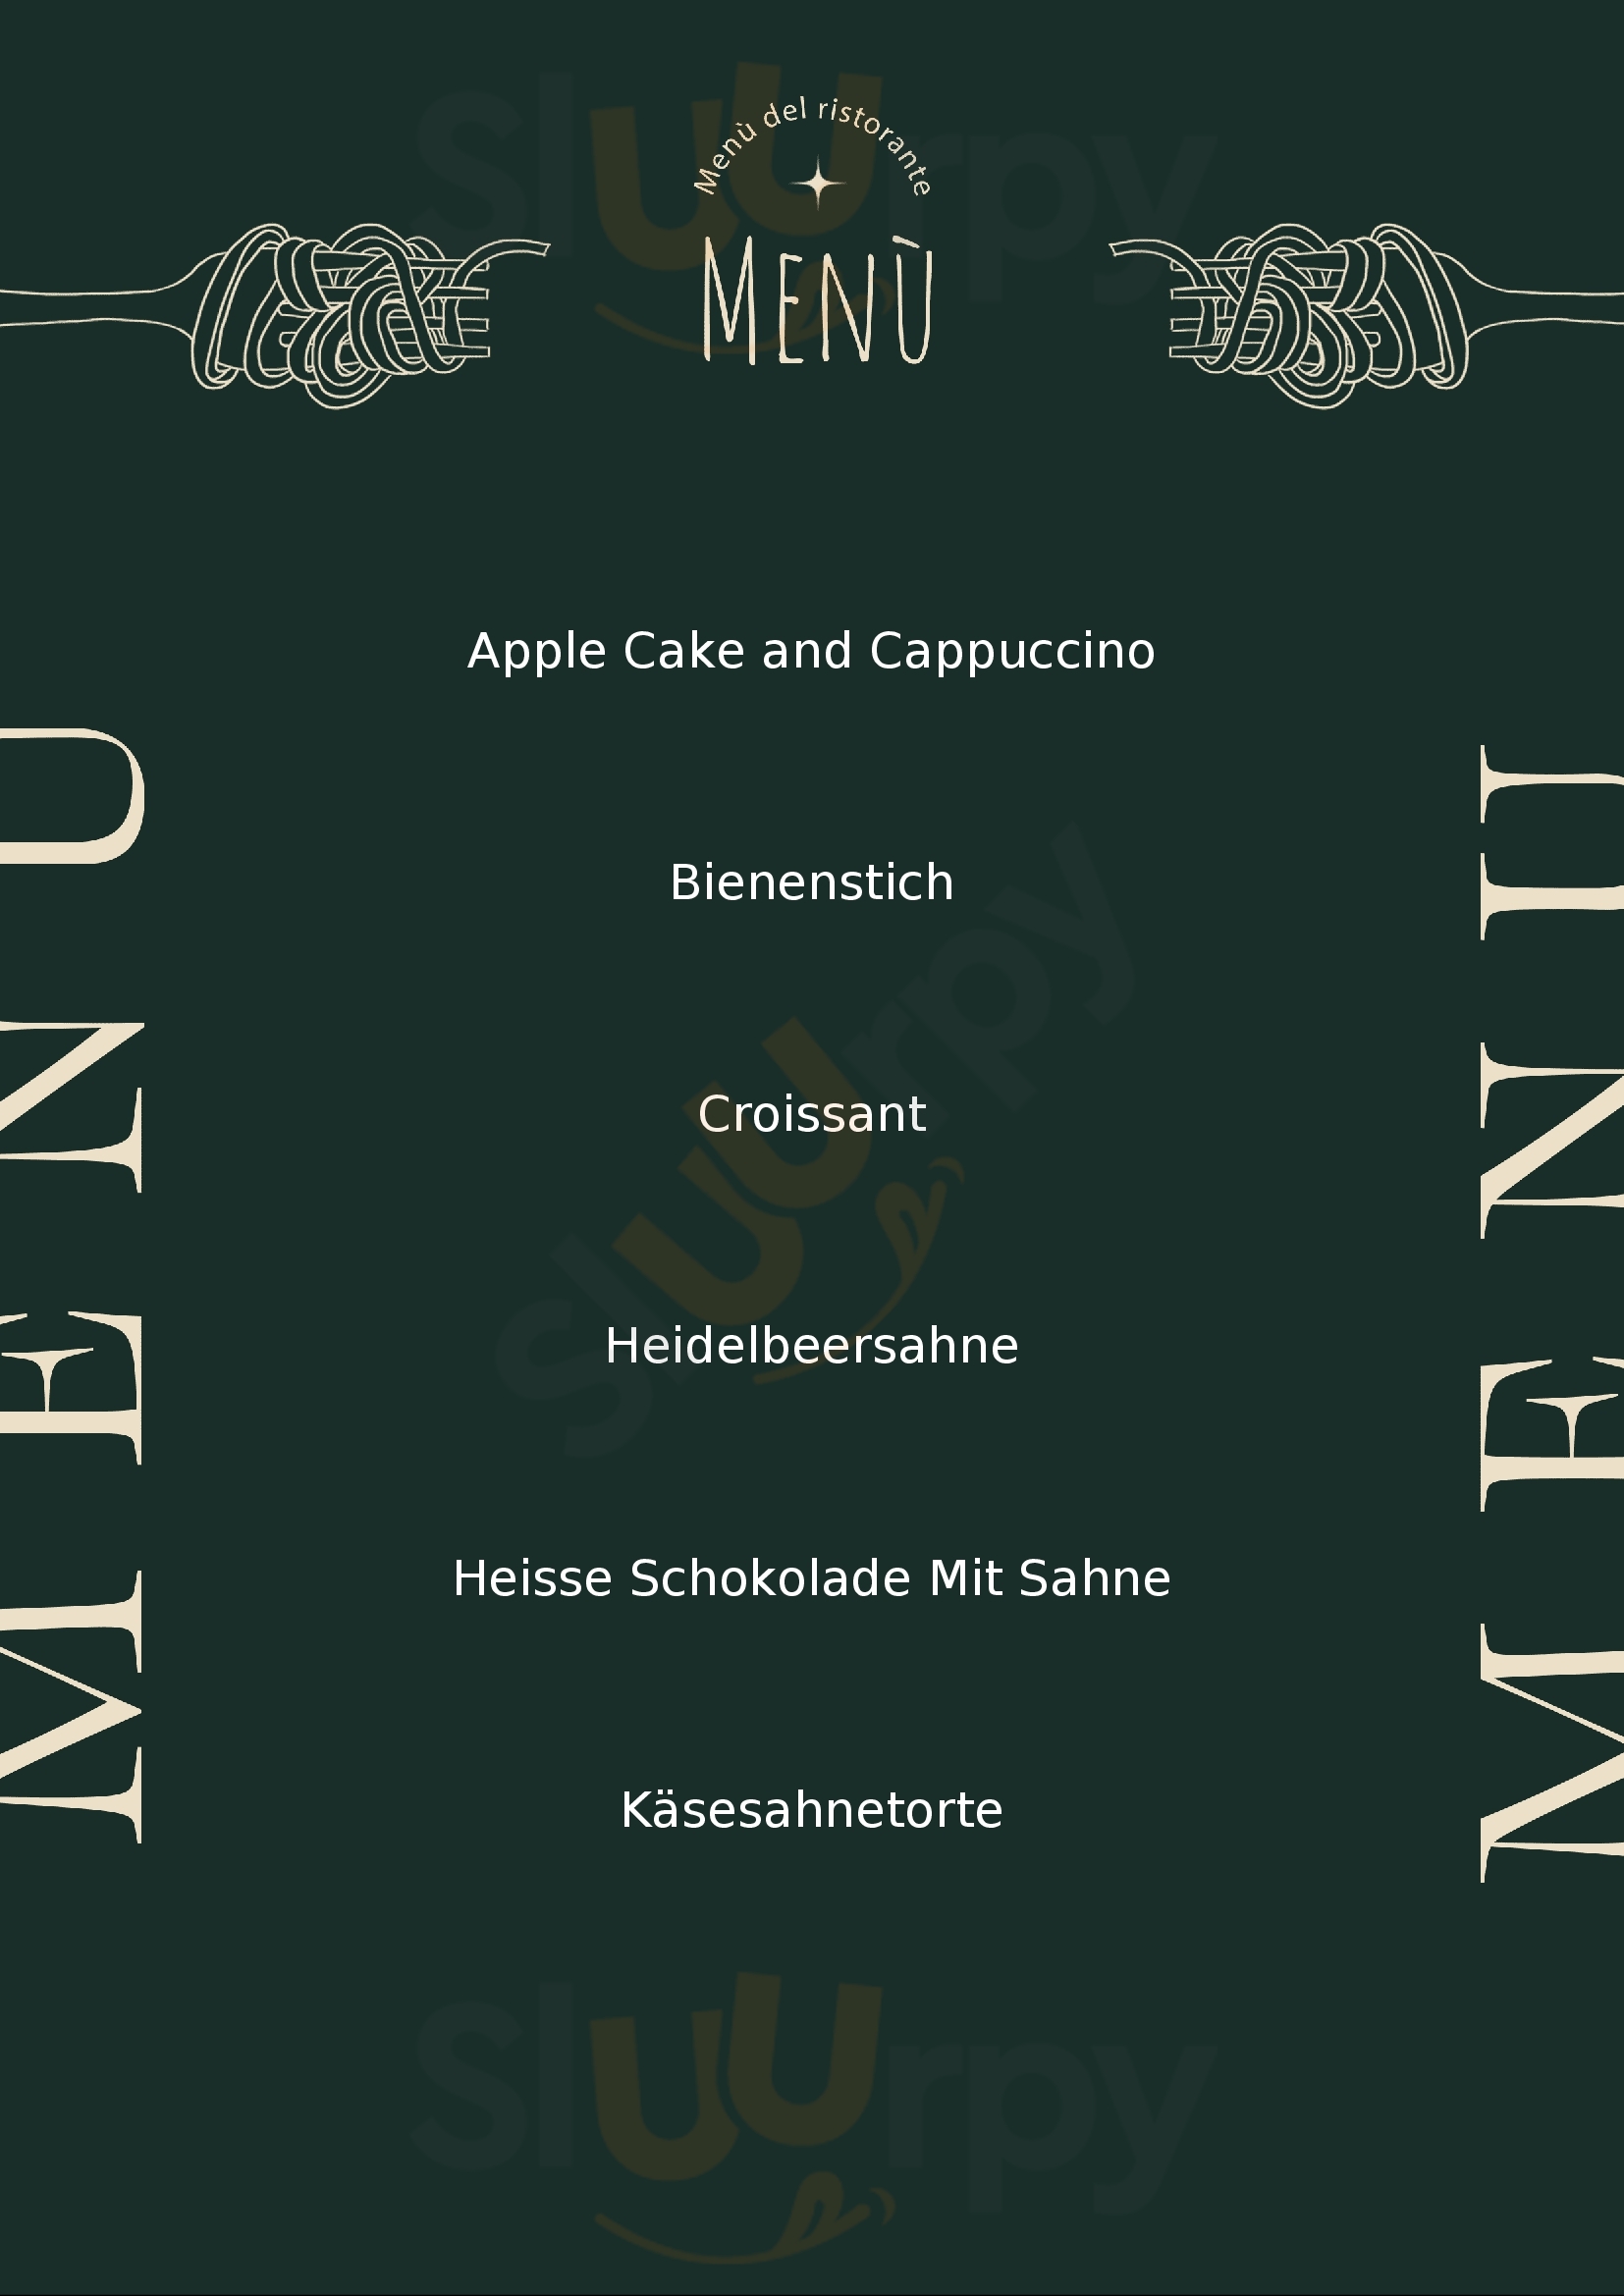 Cafe Kännle Karlsruhe Menu - 1